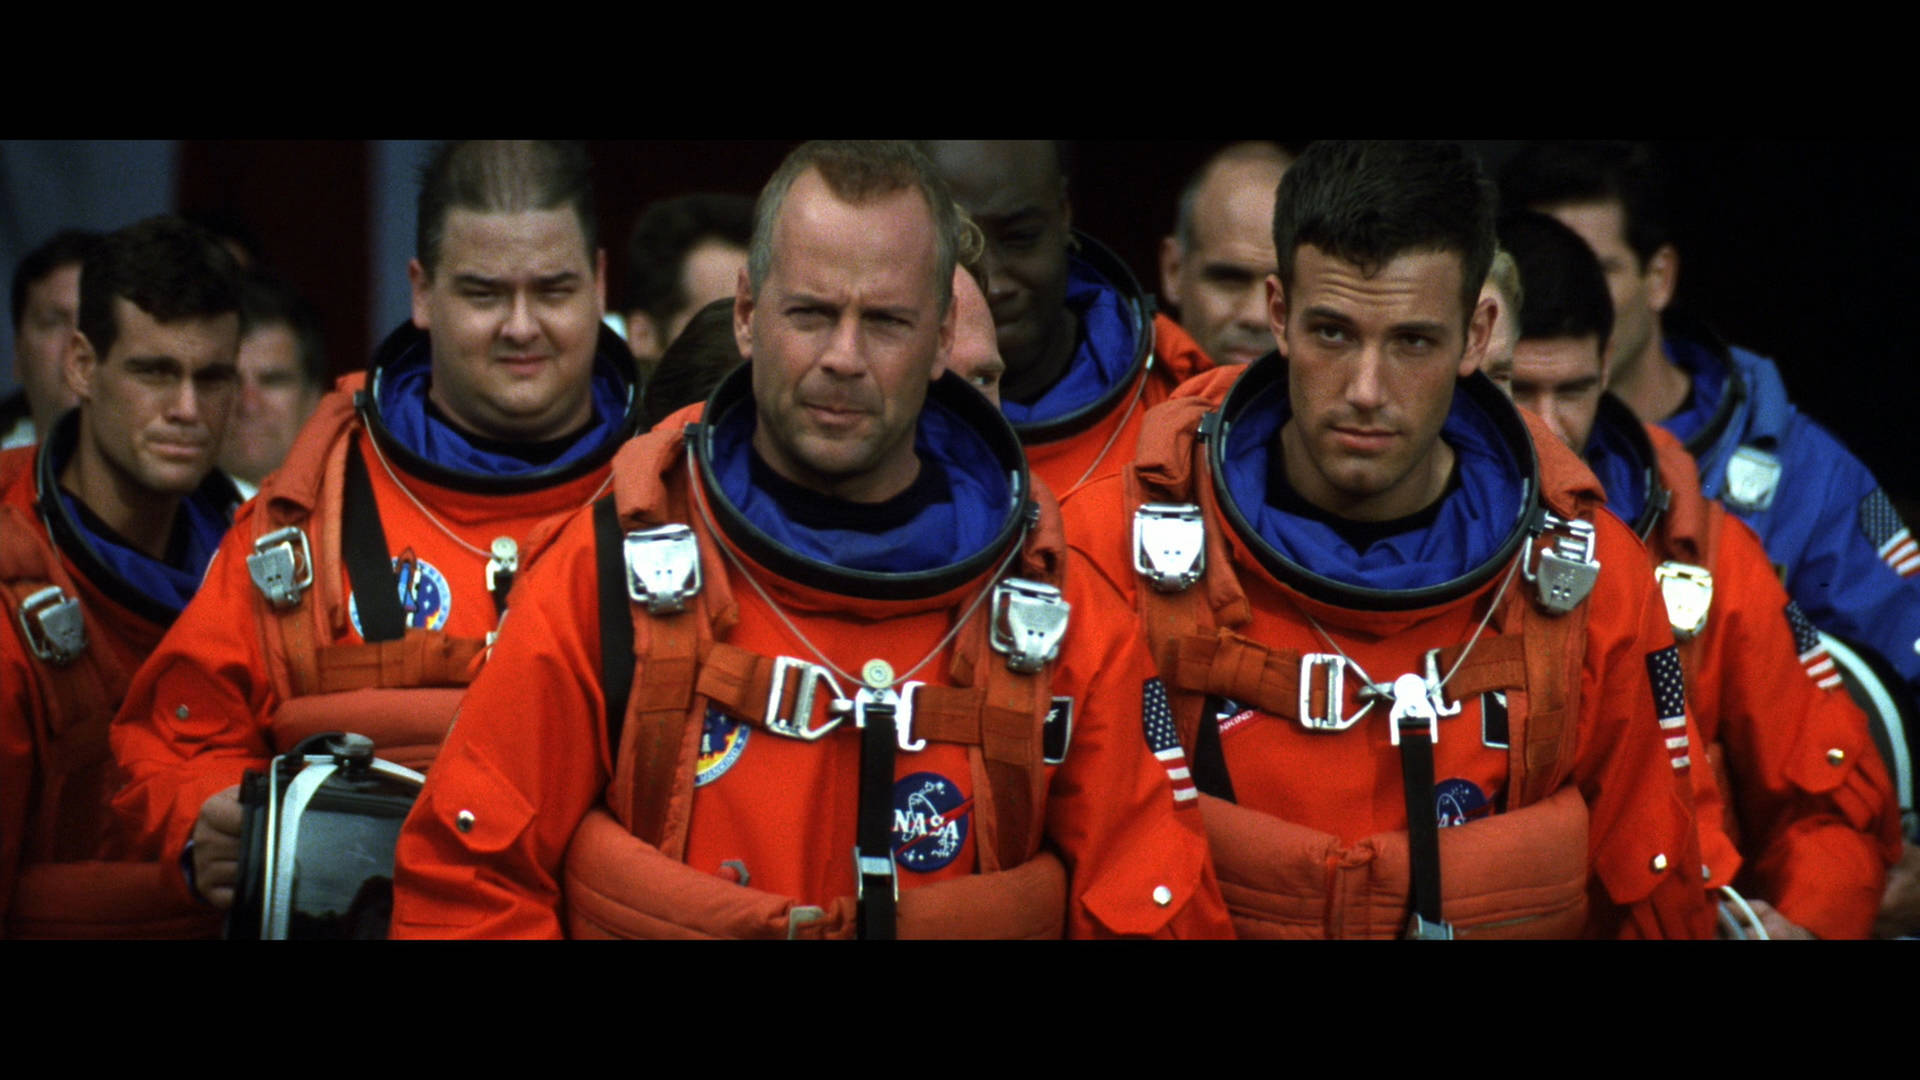 Bruce Willis Armageddon Suit Background